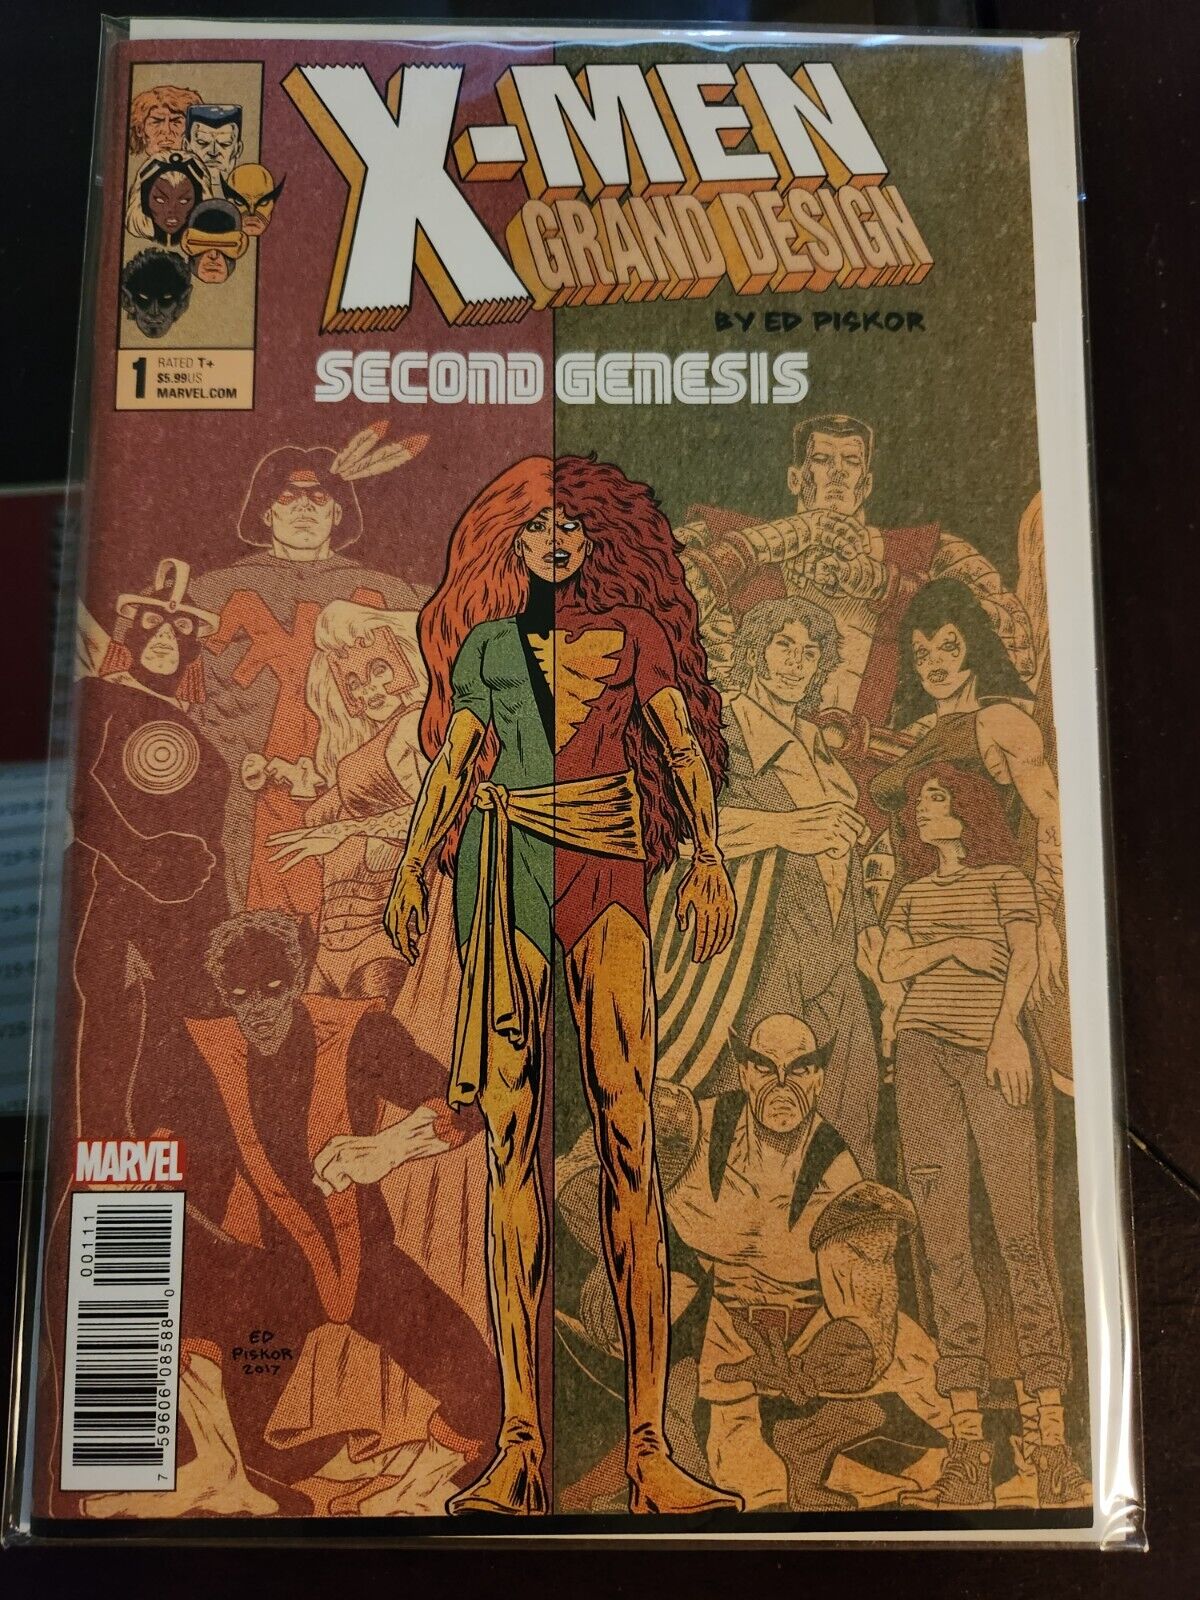 X-Men: Grand Design - Second Genesis #1 MARVEL COMIC BOOK 9.6 V19-90